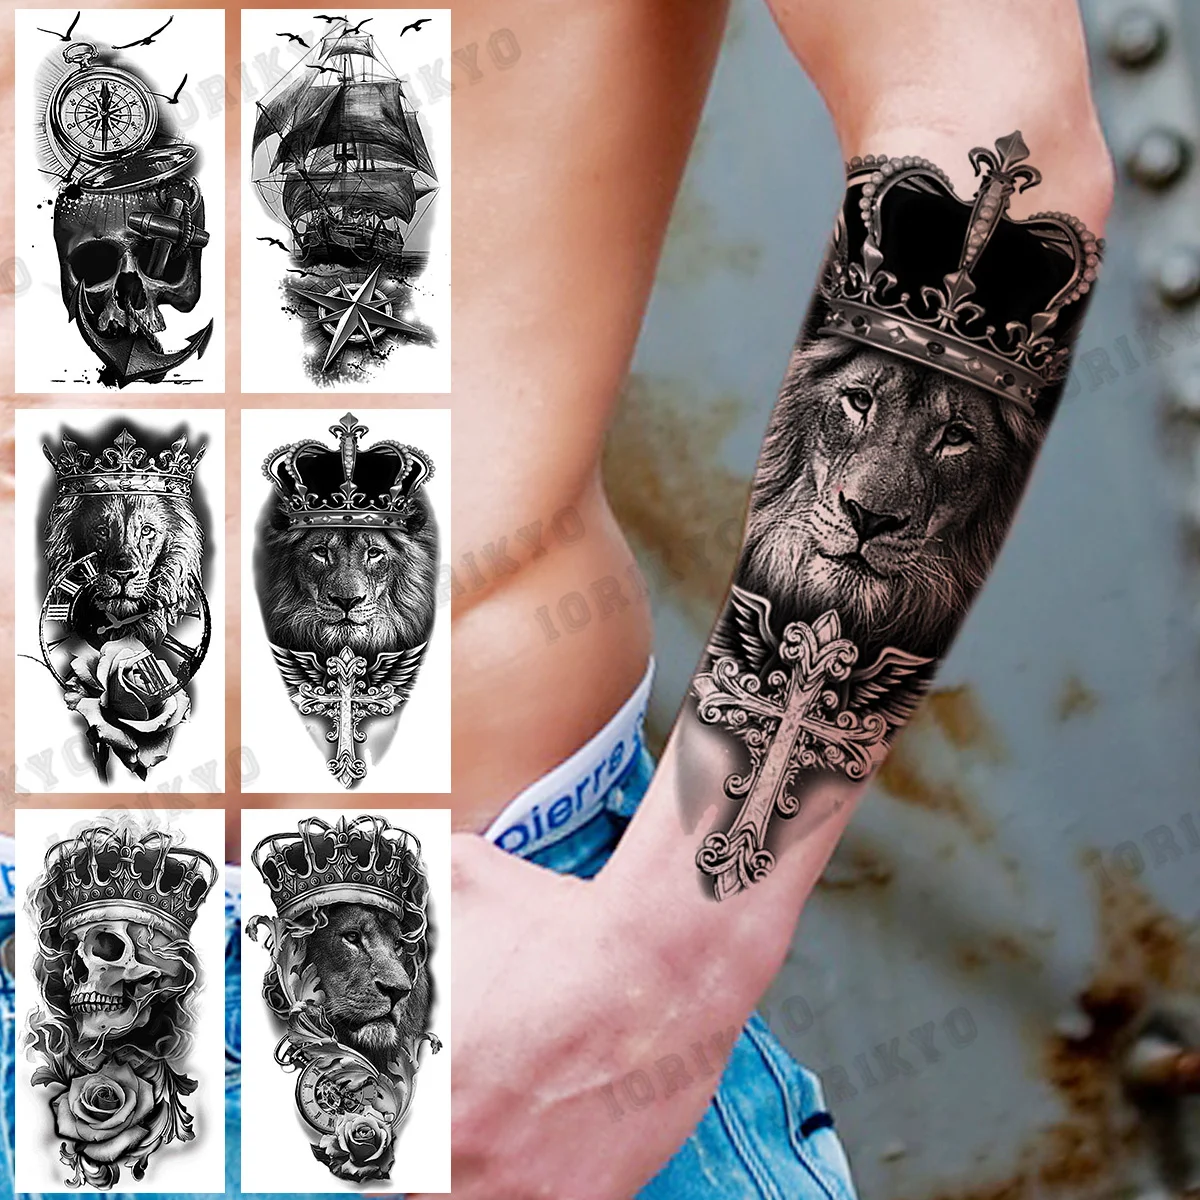 

Black Lion Crown Cross Temporary Tattoos For Men Women Pirate Ship Skull Compass Anchor Fake Tattoo Body Art Waterproof Tatoos